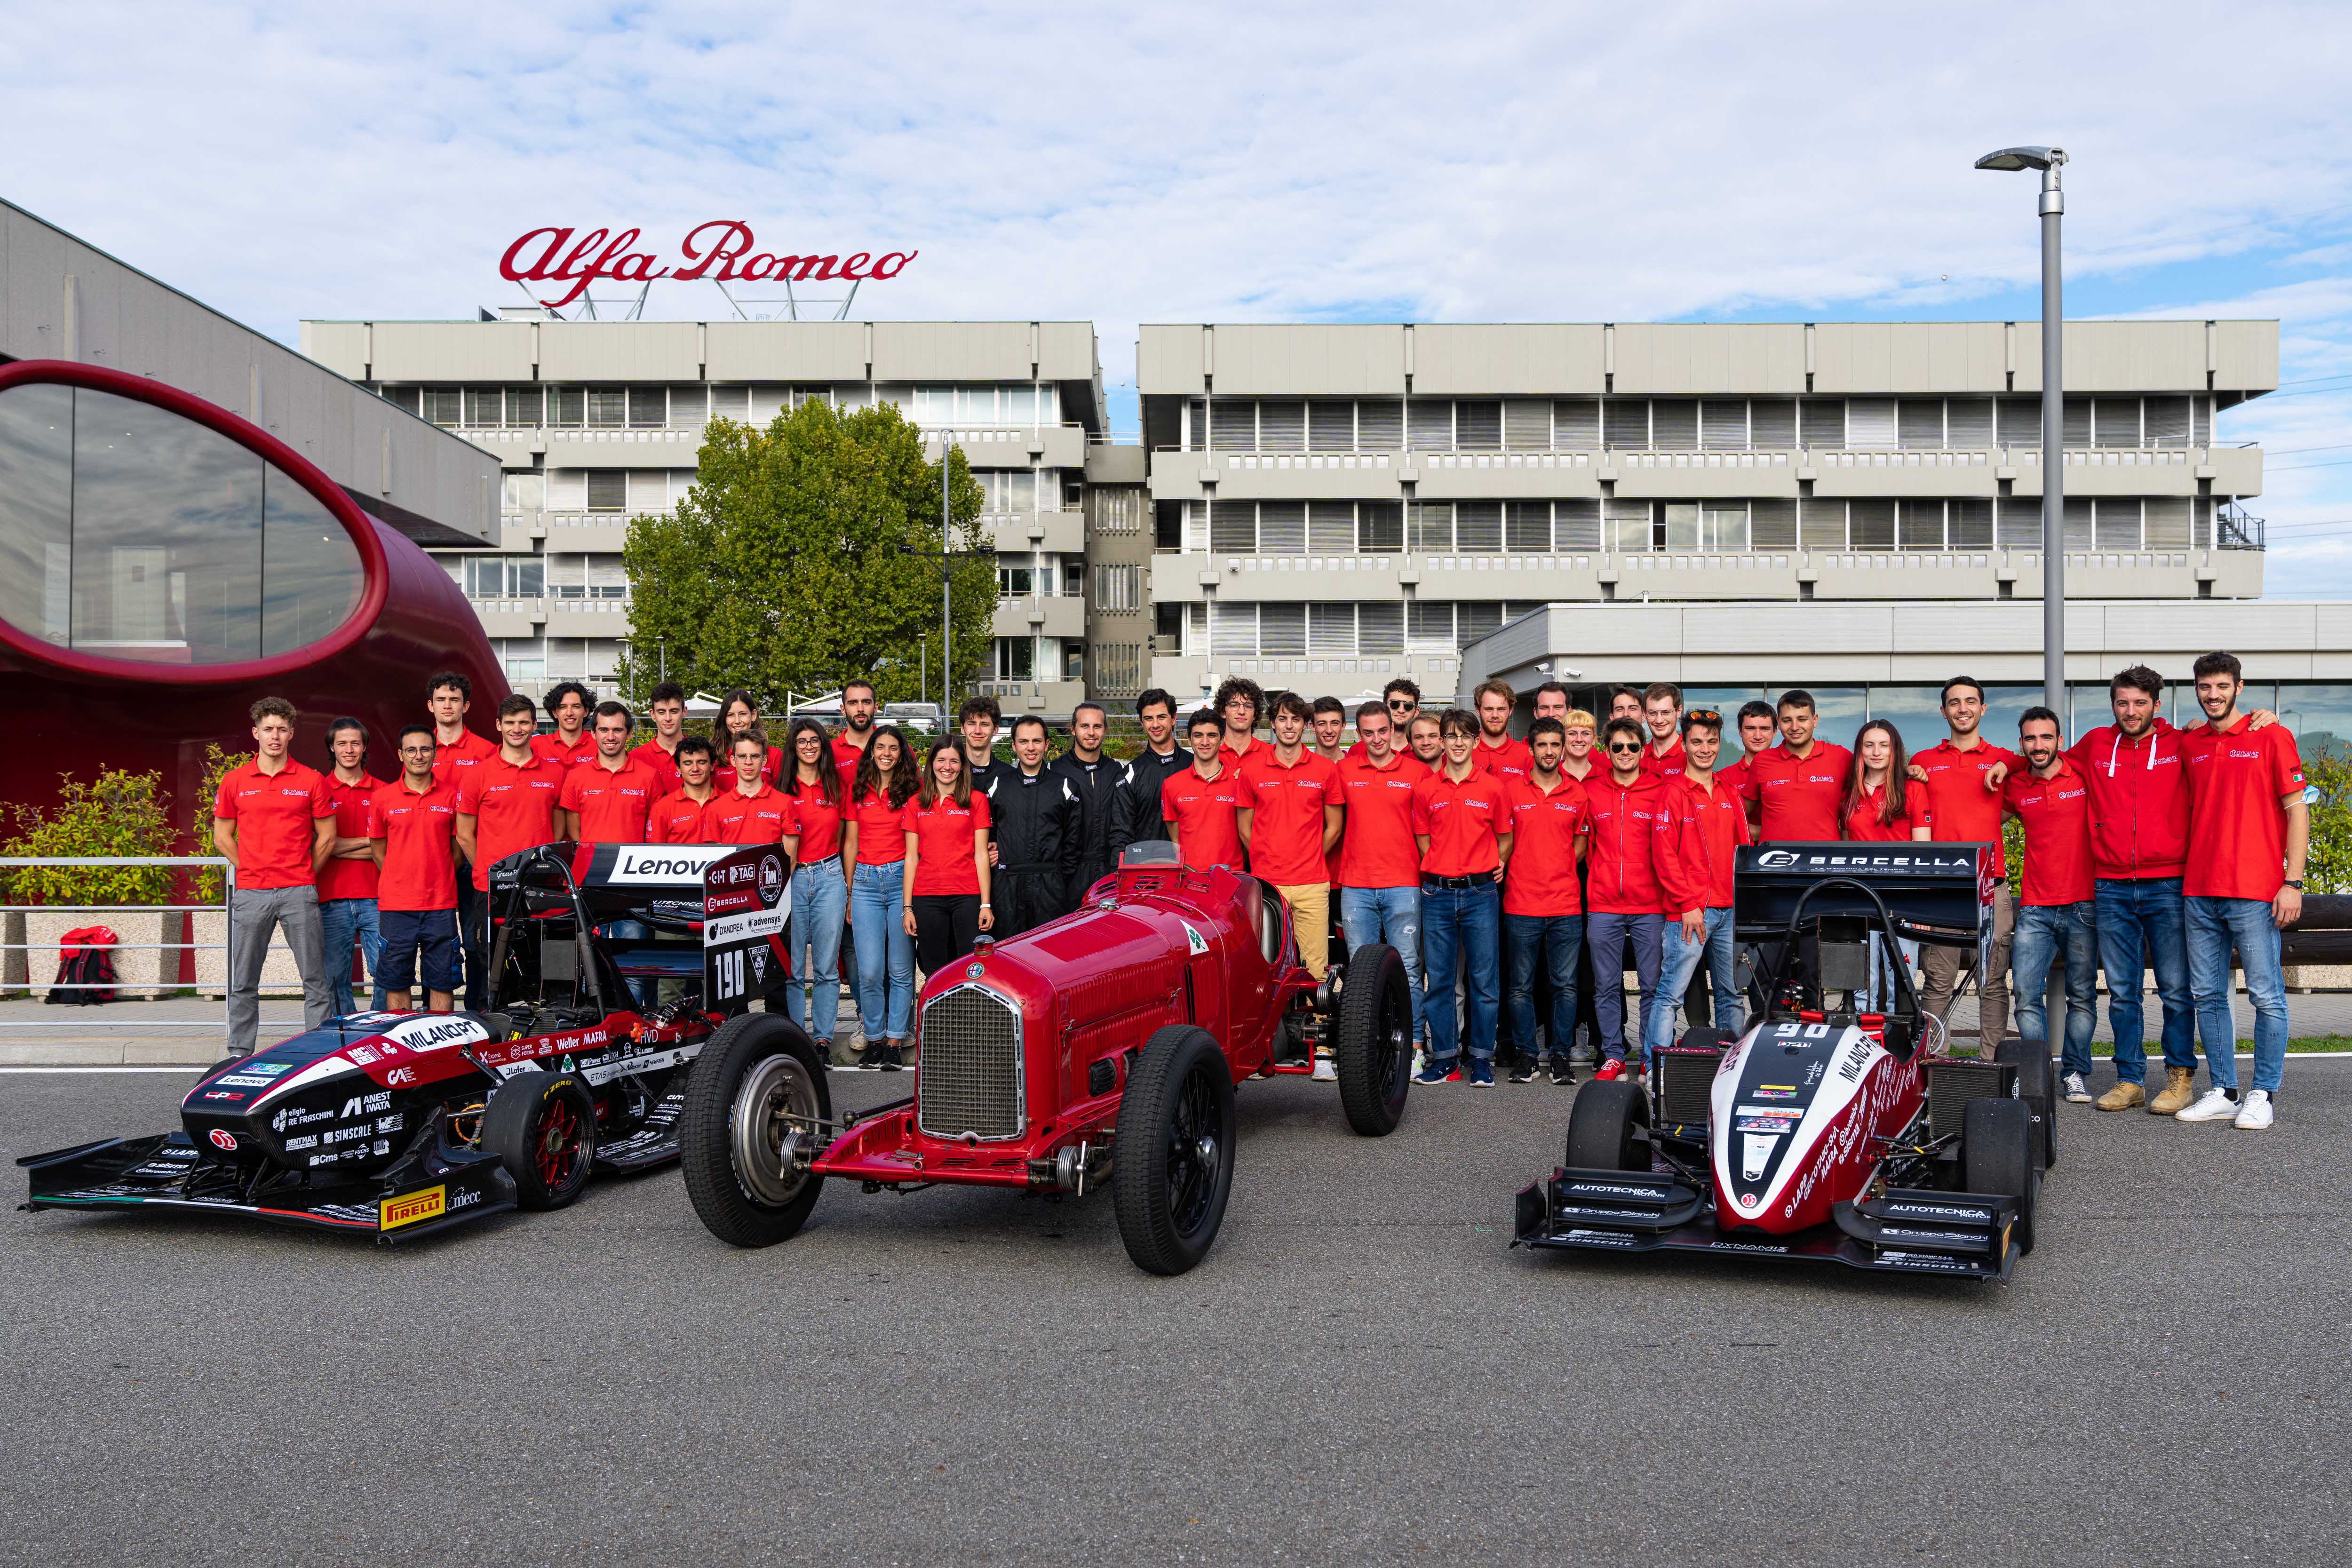 Photos of the Milan Polytechnic's racing team